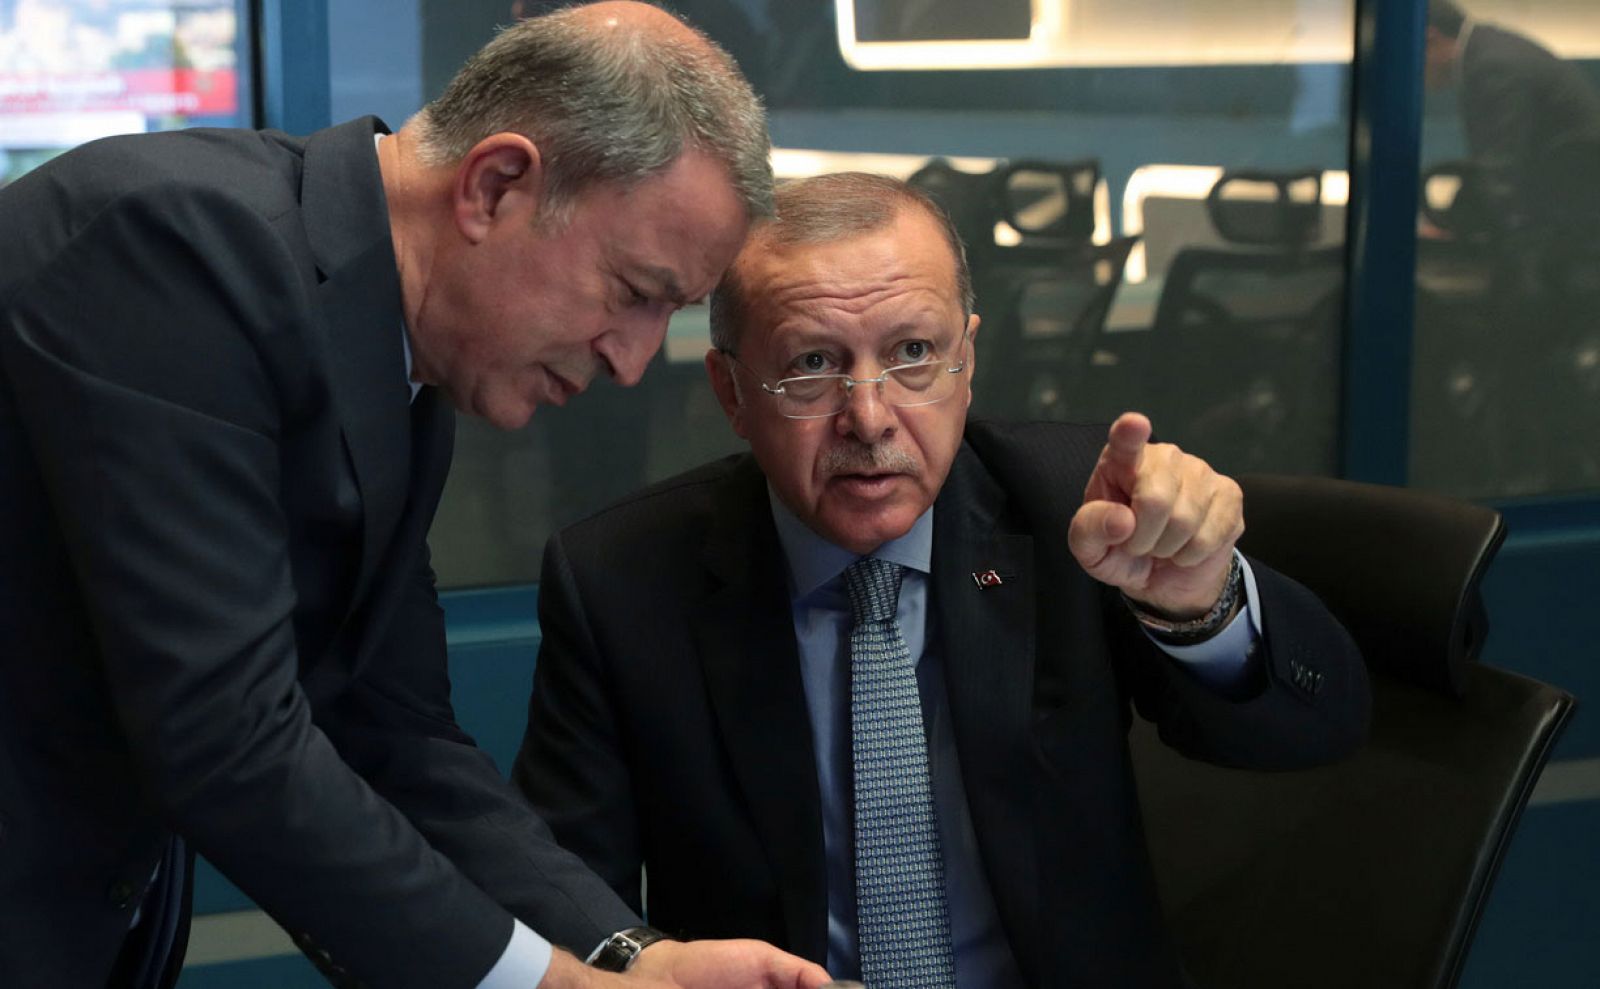 Turkish President Tayyip Erdogan is seen with Defence Minister Hulusi Akar at the operation center in Ankara, Turkey